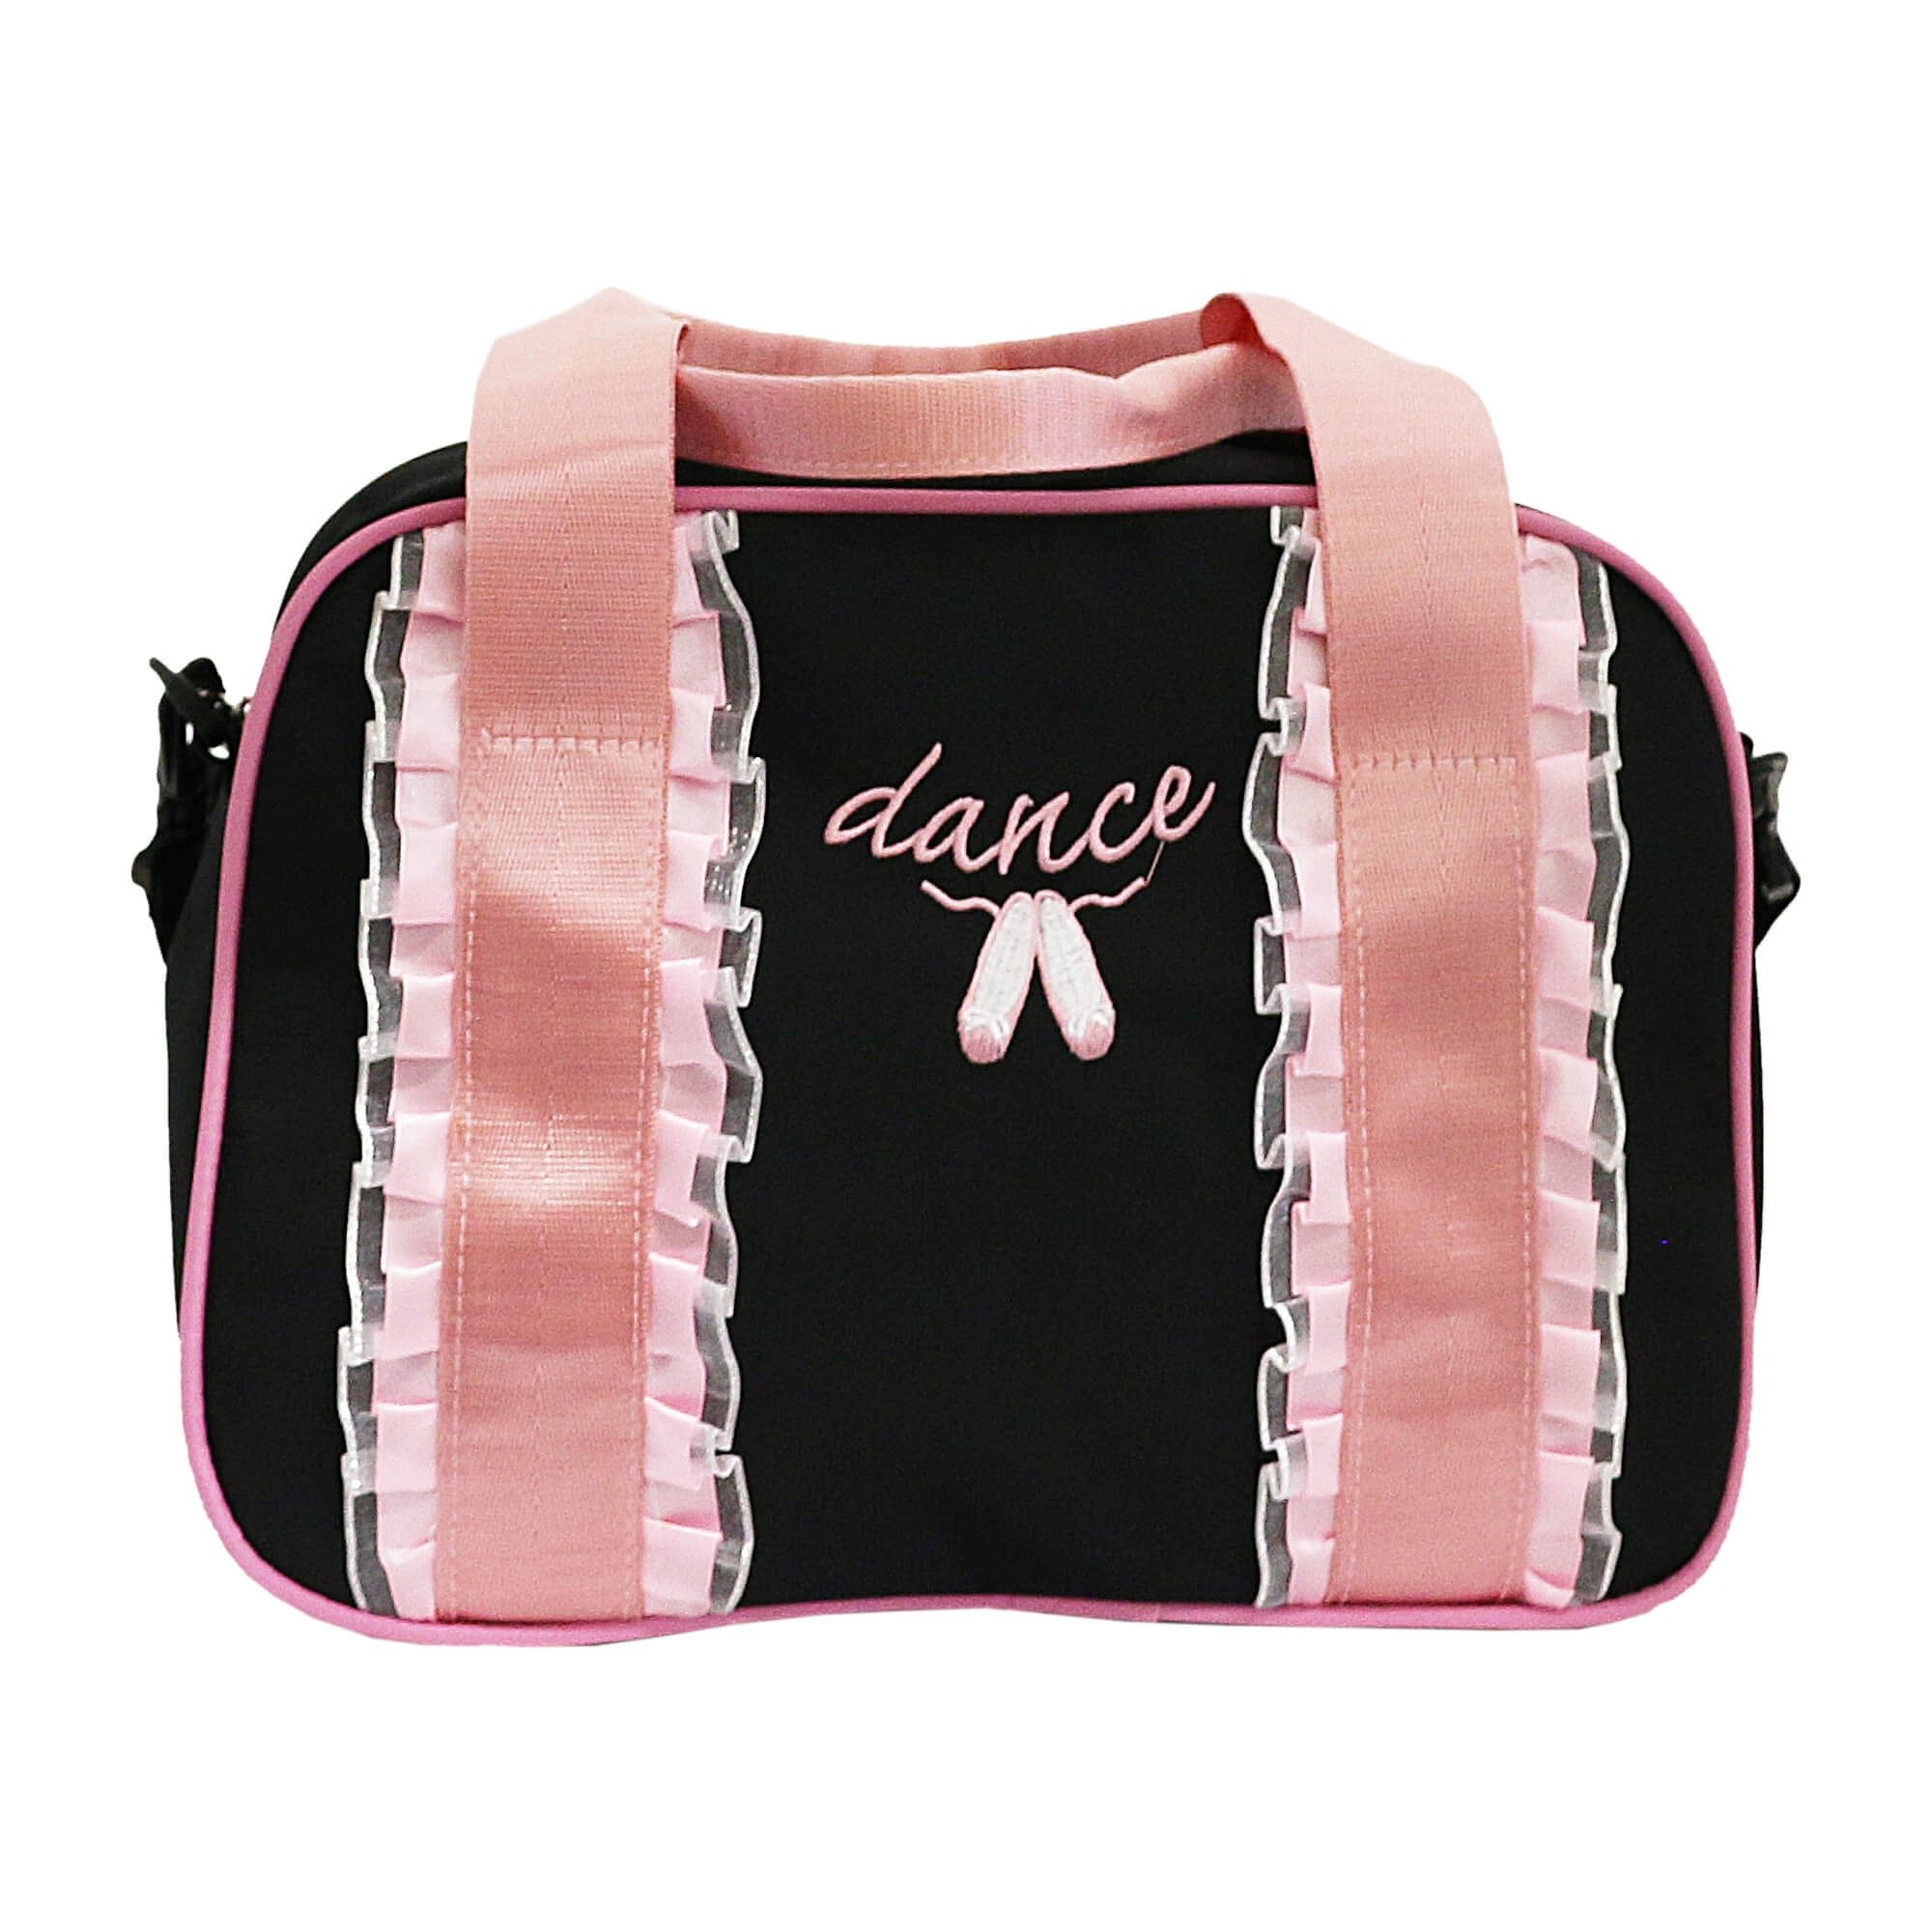 Danzcue Ballet Dance Duffle Bag - Click Image to Close